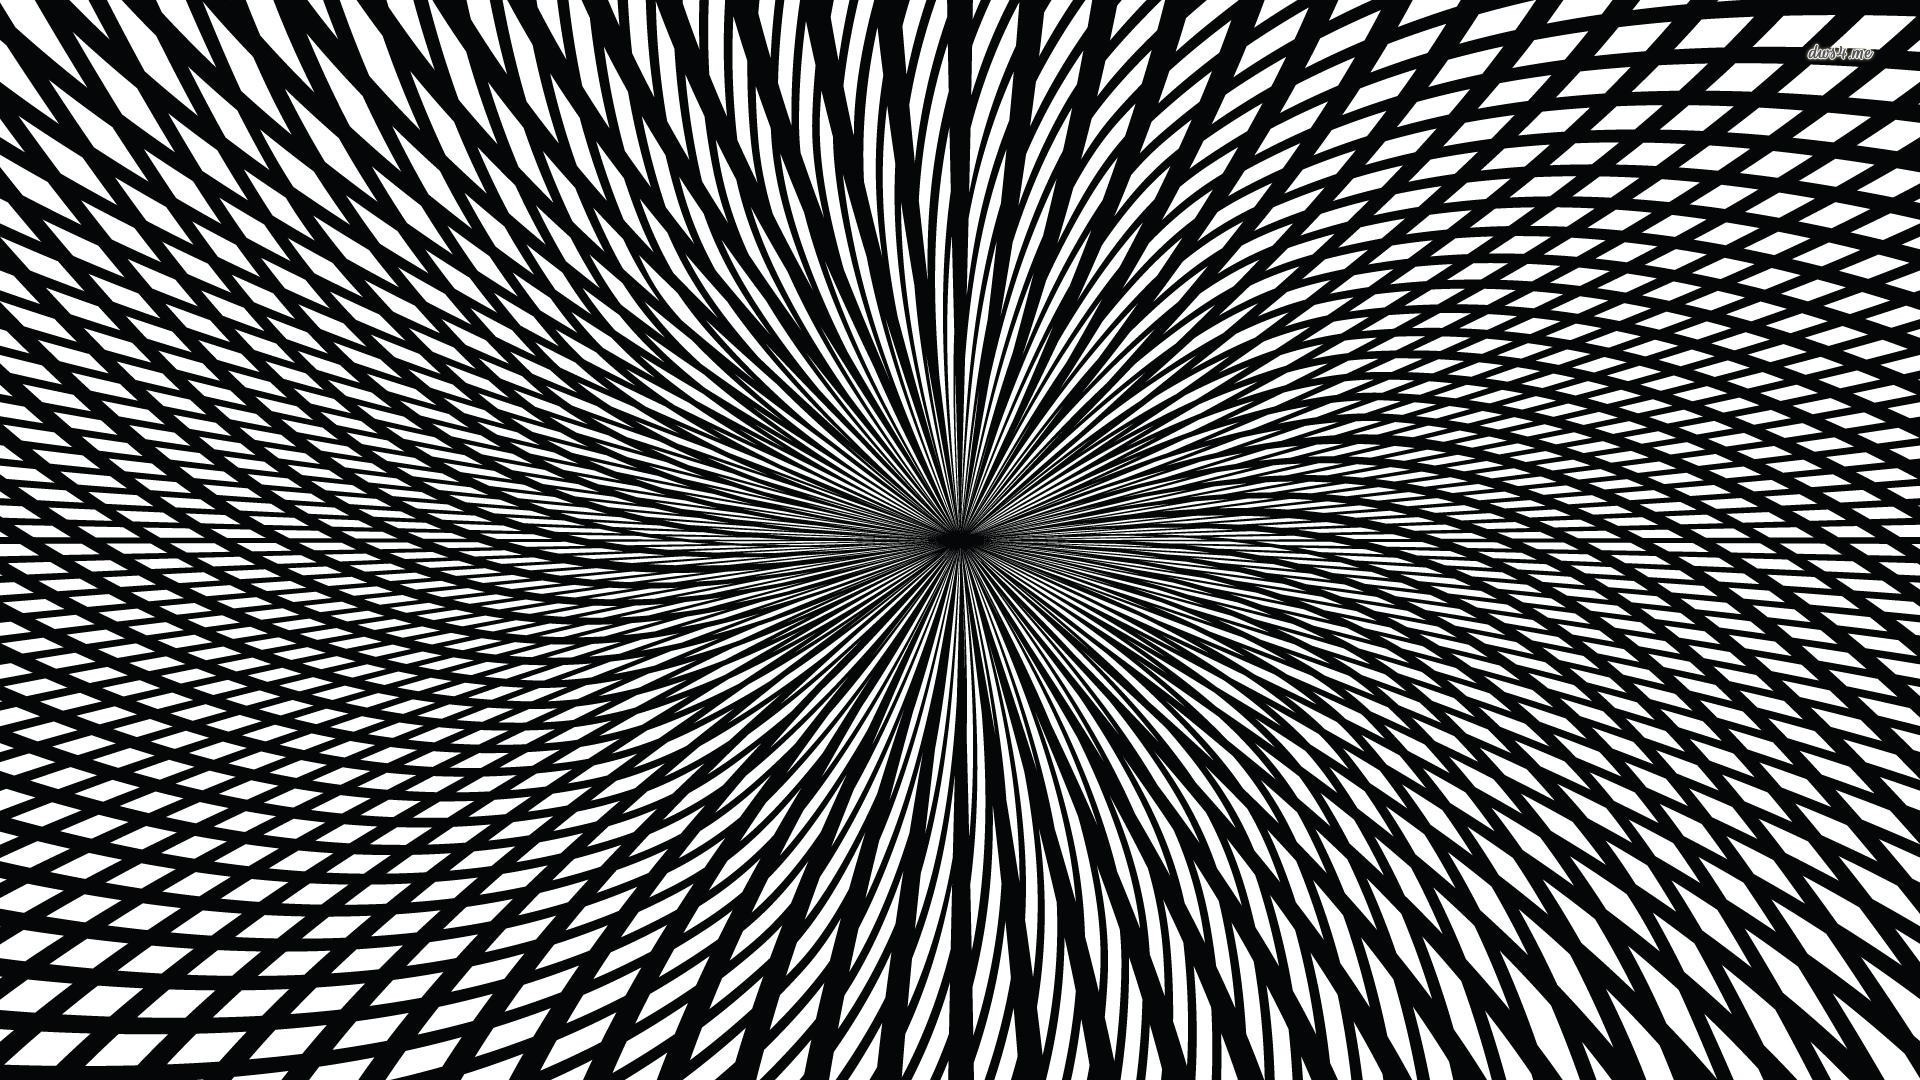 1920x1080 Greatest paper illusions wallpaper jpg  Paper illusion wallpaper